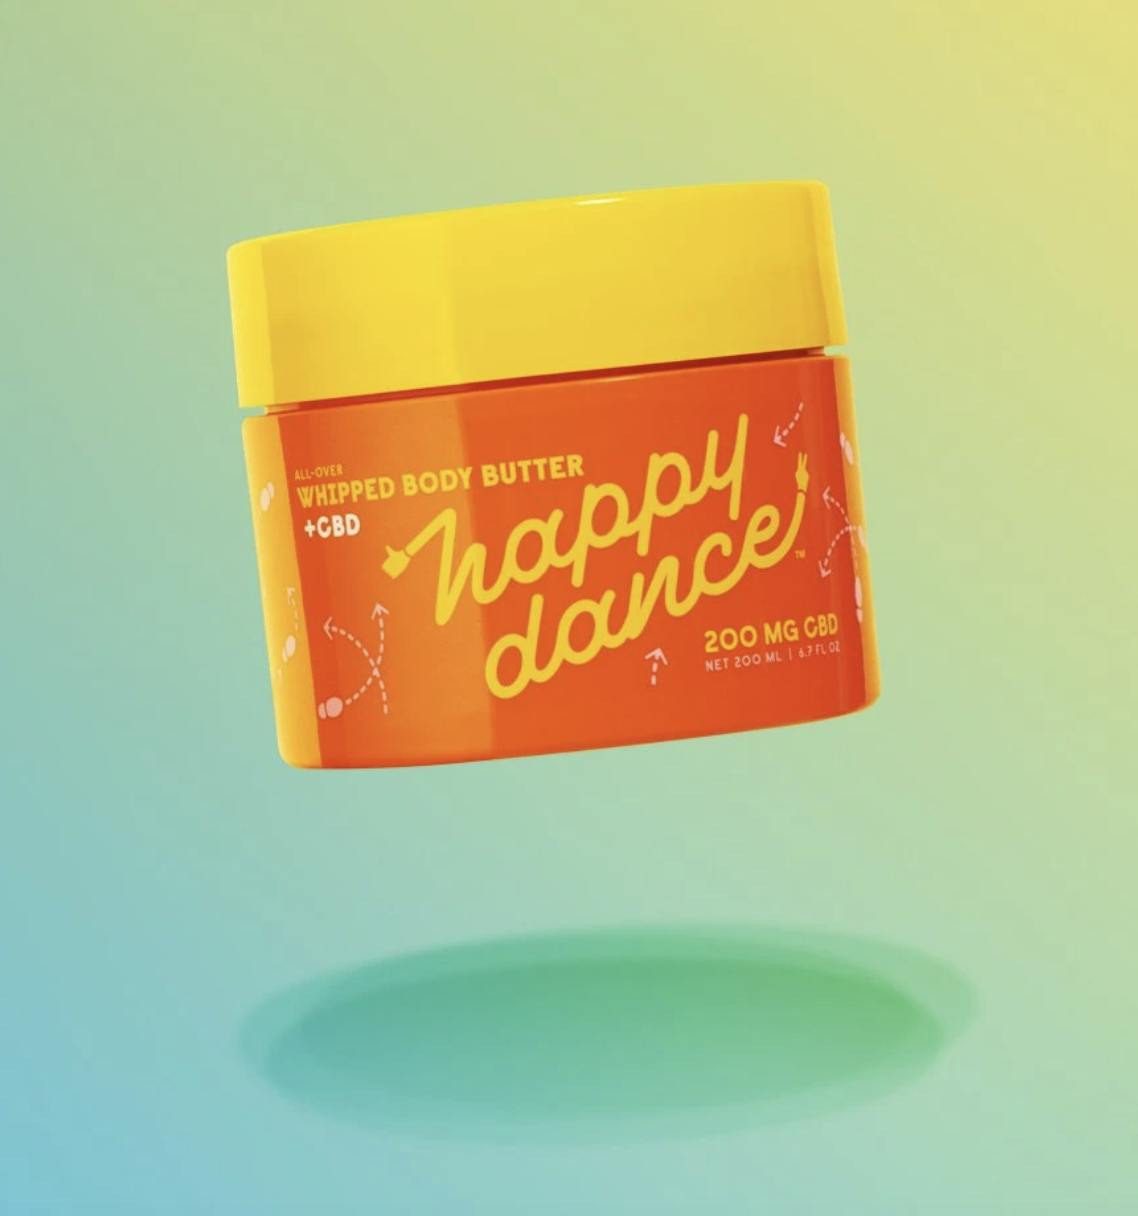 Happy Dance's CBD body butter cream